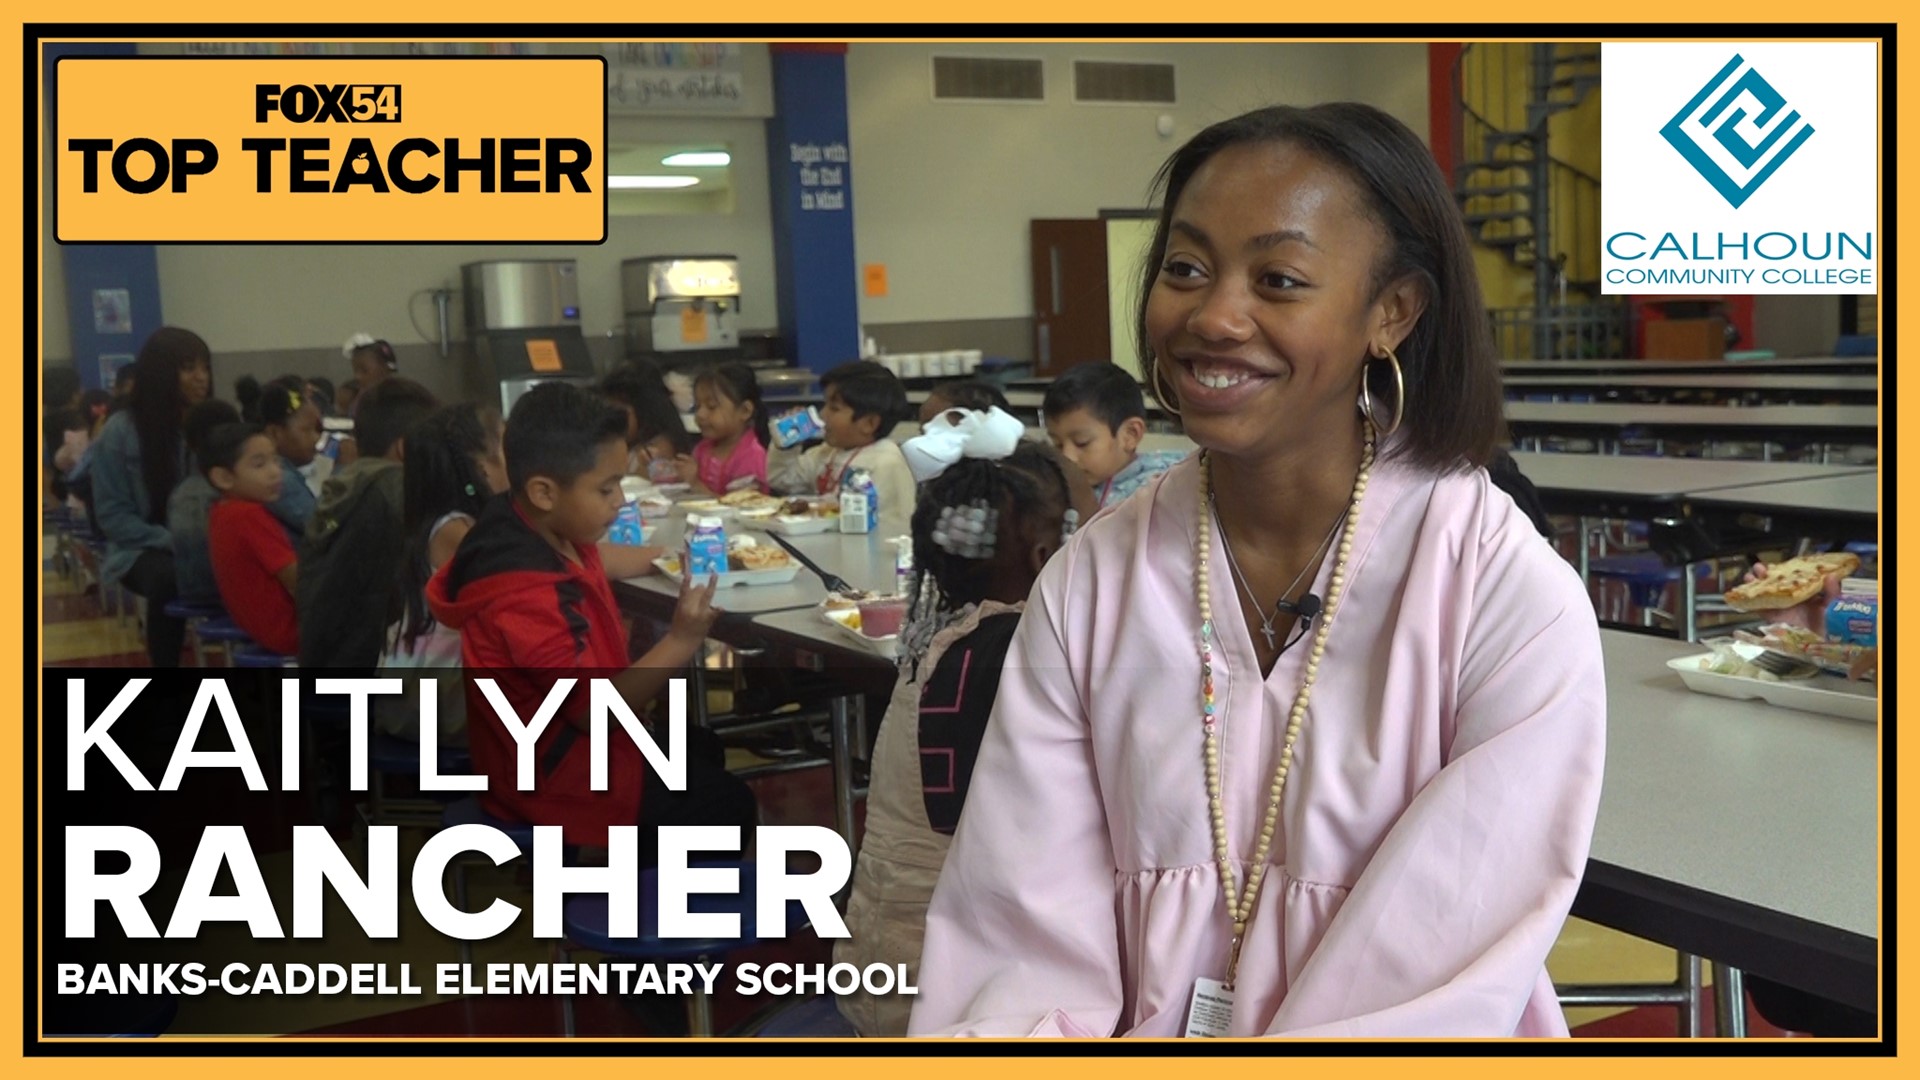 This week's Top Teacher is kindergarten teacher Kaitlyn Rancher.